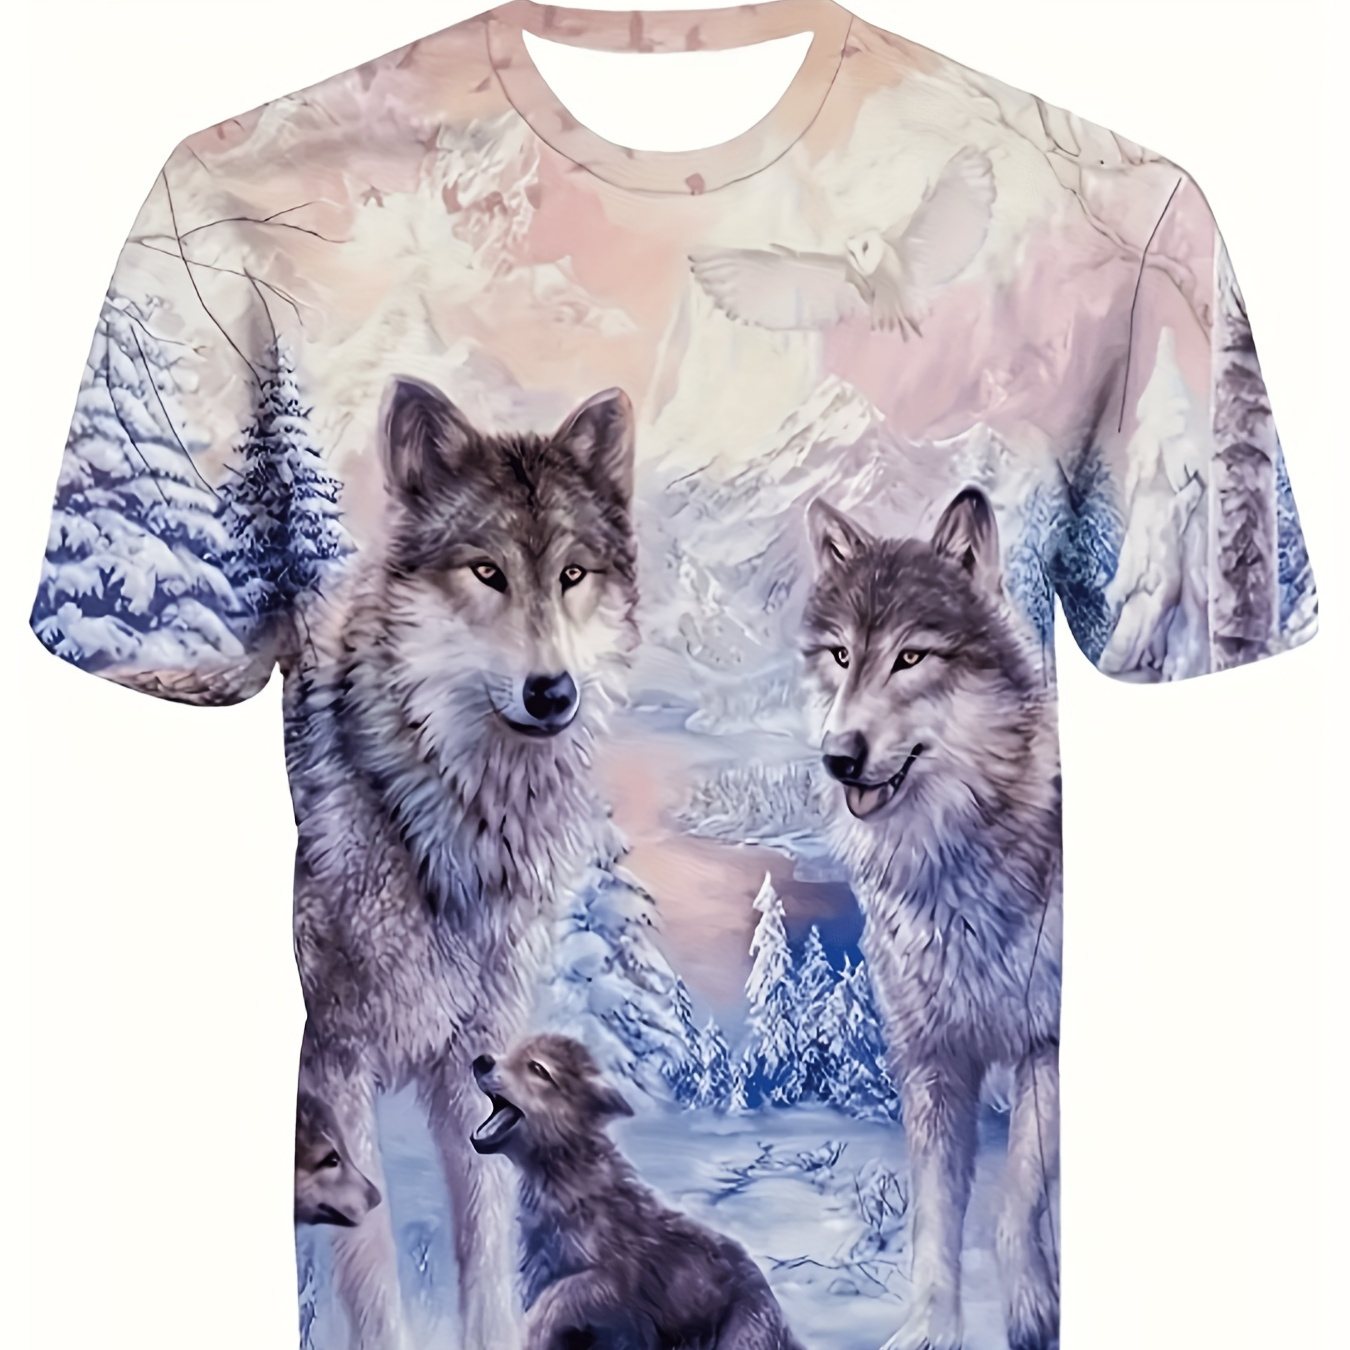 

Men's Summer 3d Digital Printing T-shirt - Casual Loose Fit For Comfort!